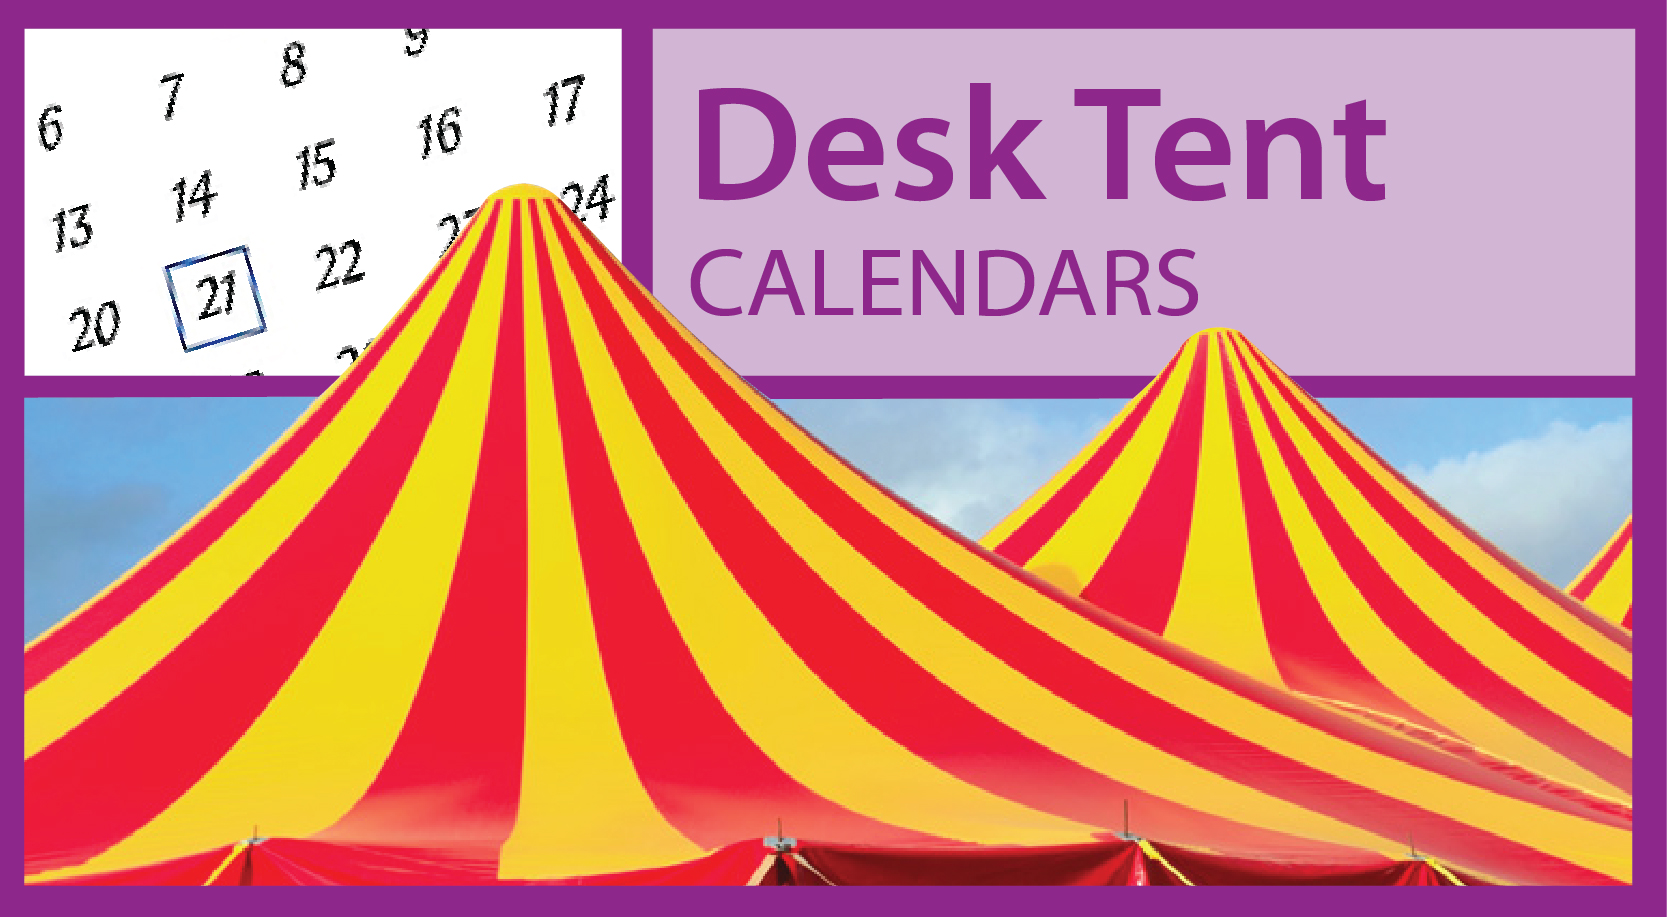 Promotional Desk Tent Calendars